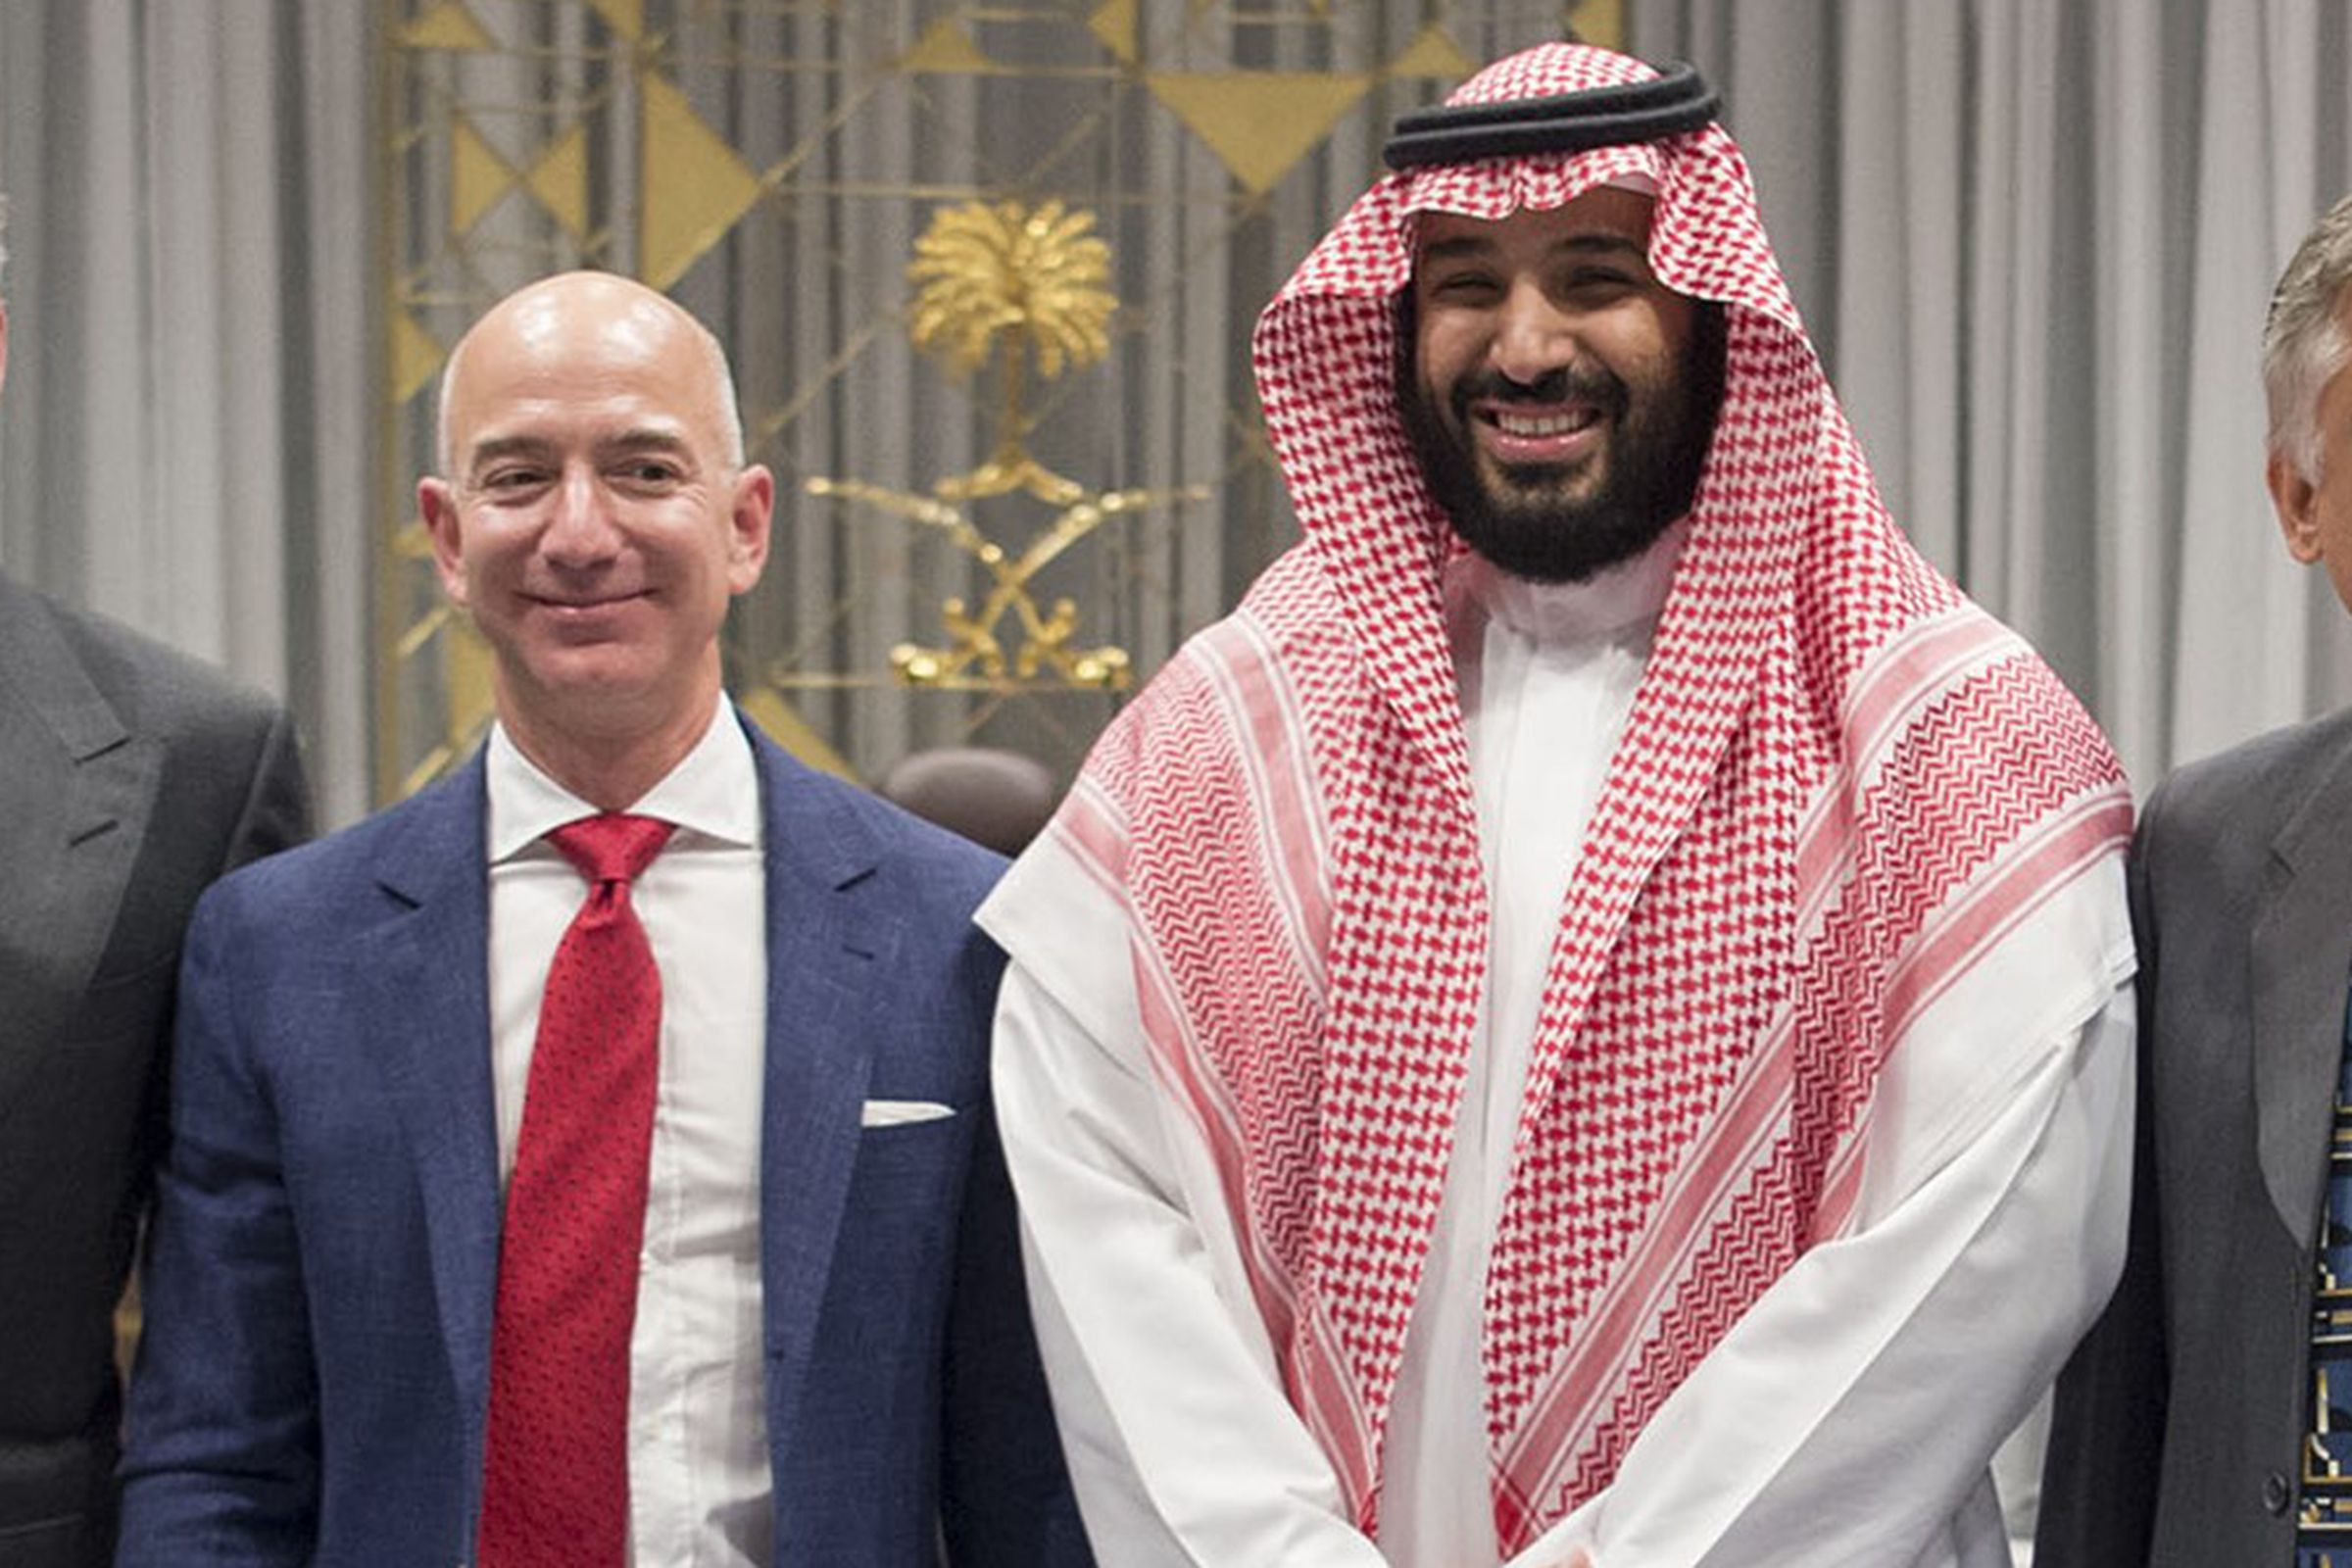 Founder of the Amazon website Jeff Bezos visits Saudi Arabia